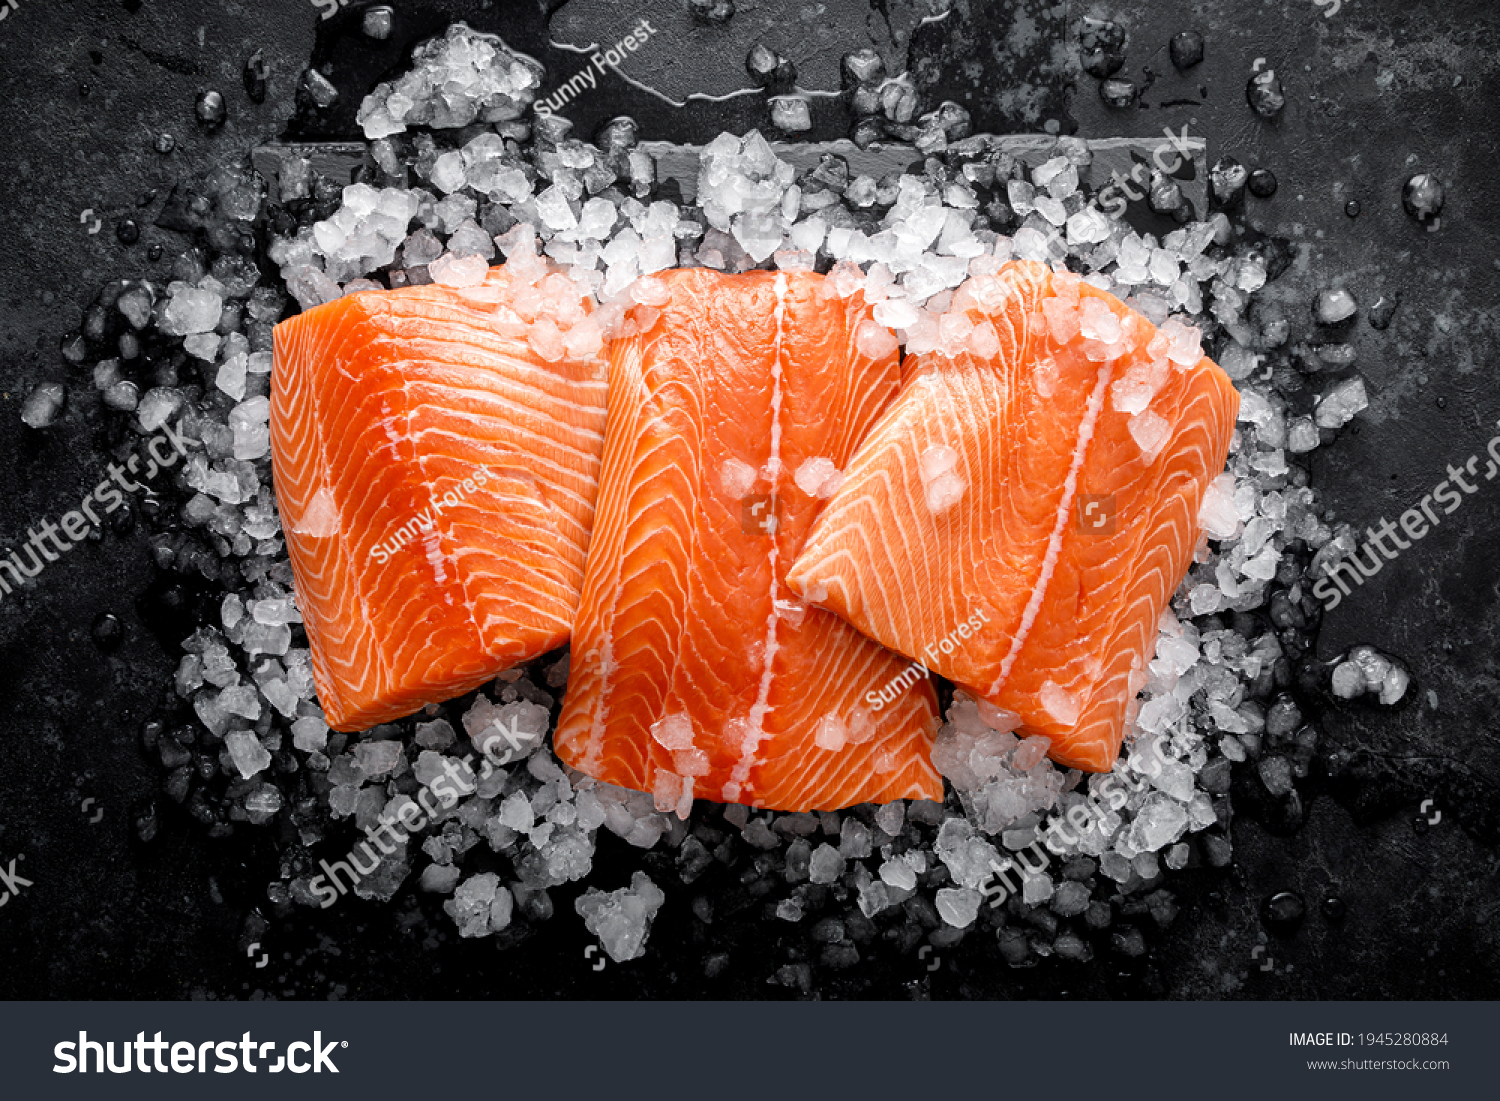 Salmon fillet. Slices of fresh raw salmon fish on ice #1945280884